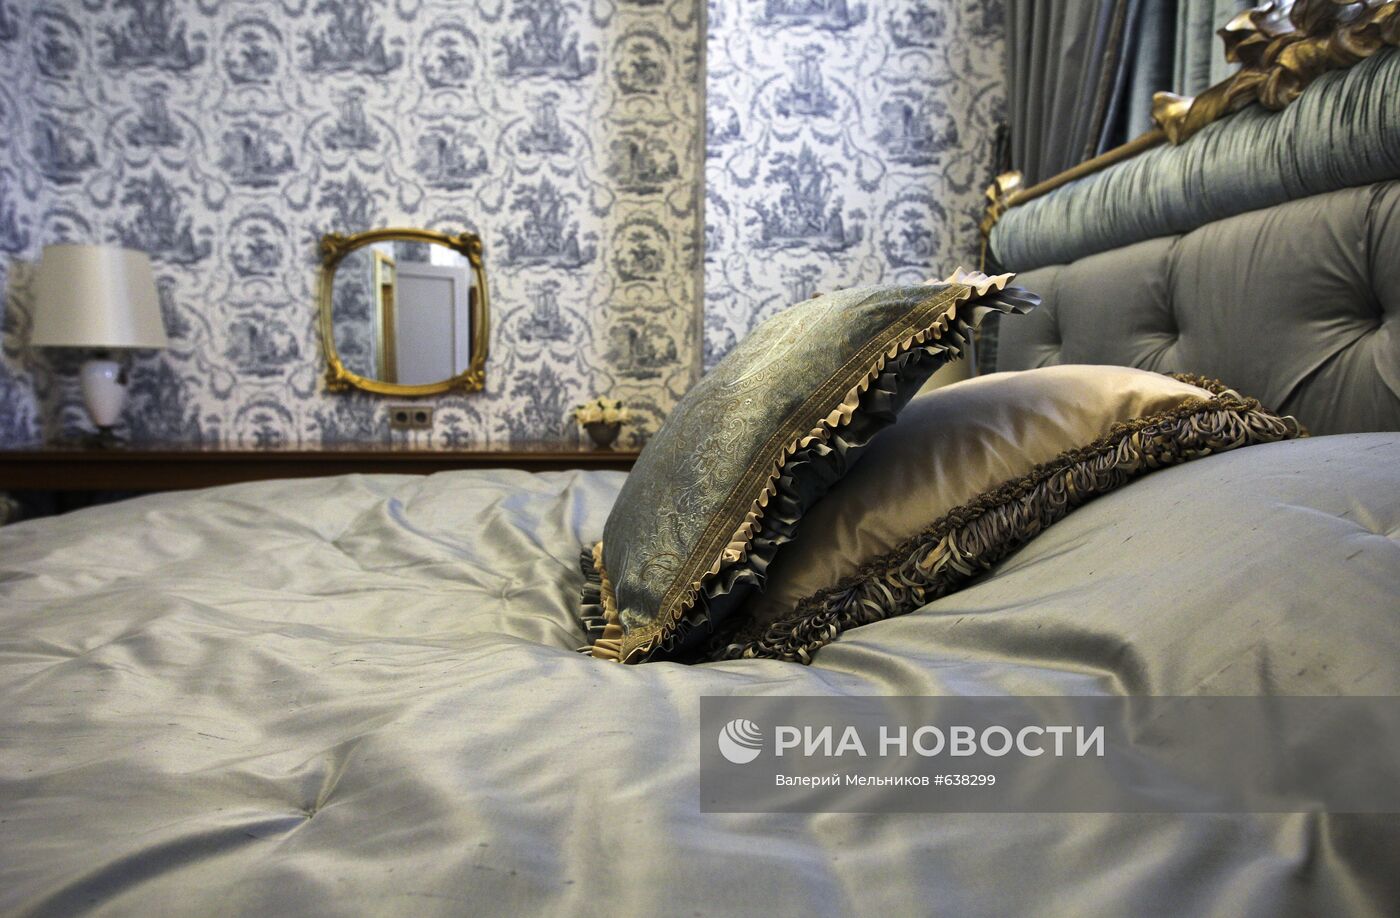 Экскурсия по гостинице Radisson Royal Hotel, Moscow